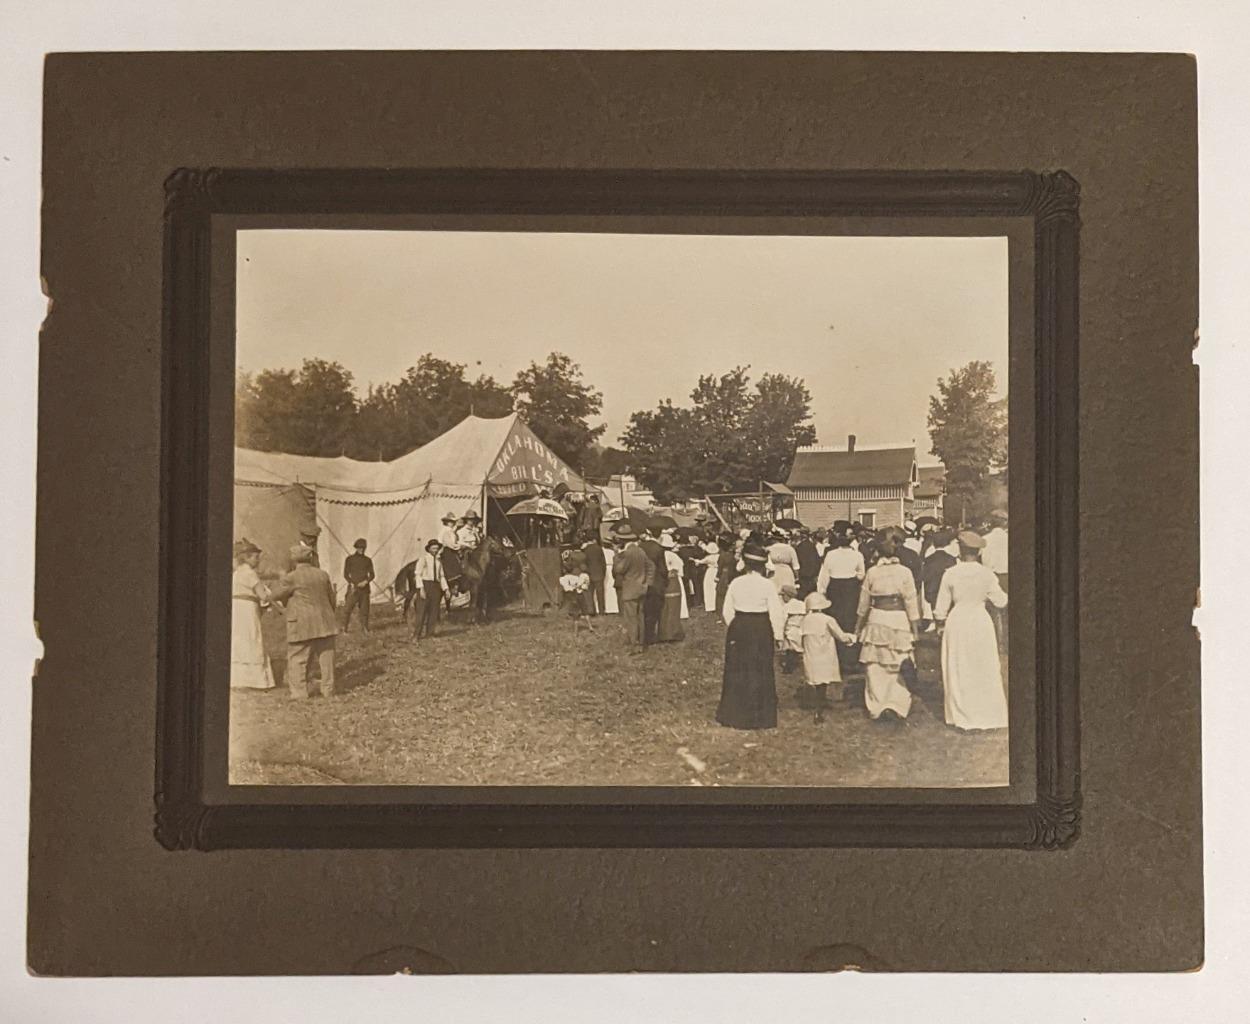 1927 COBELSKILL FAIR GROUNDS, OKLAHOMA BILL'S WILD WEST SHOW CIRCUS TENT w CROWD